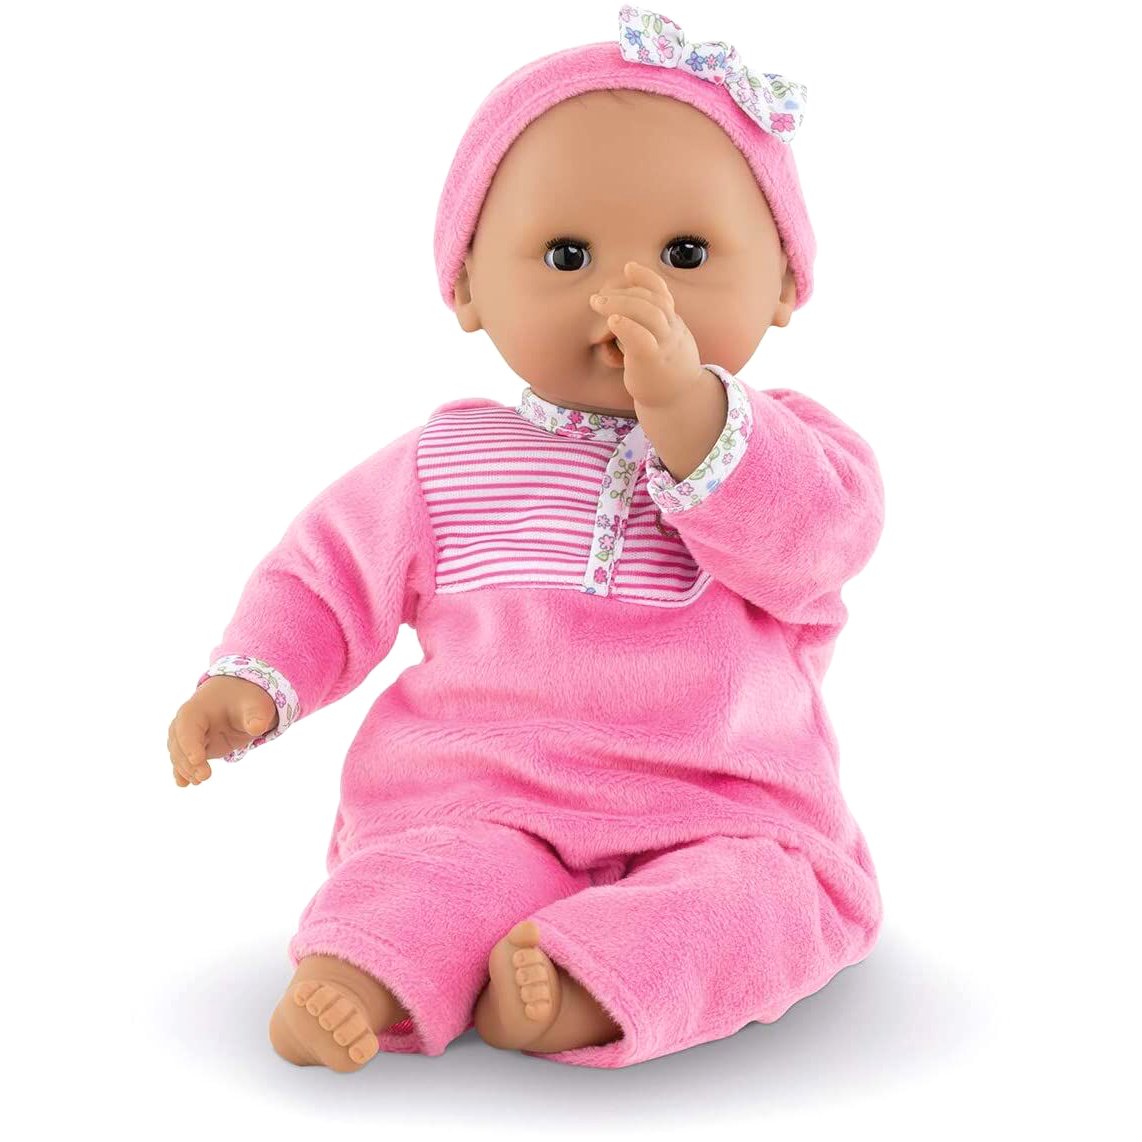 ethnic baby dolls